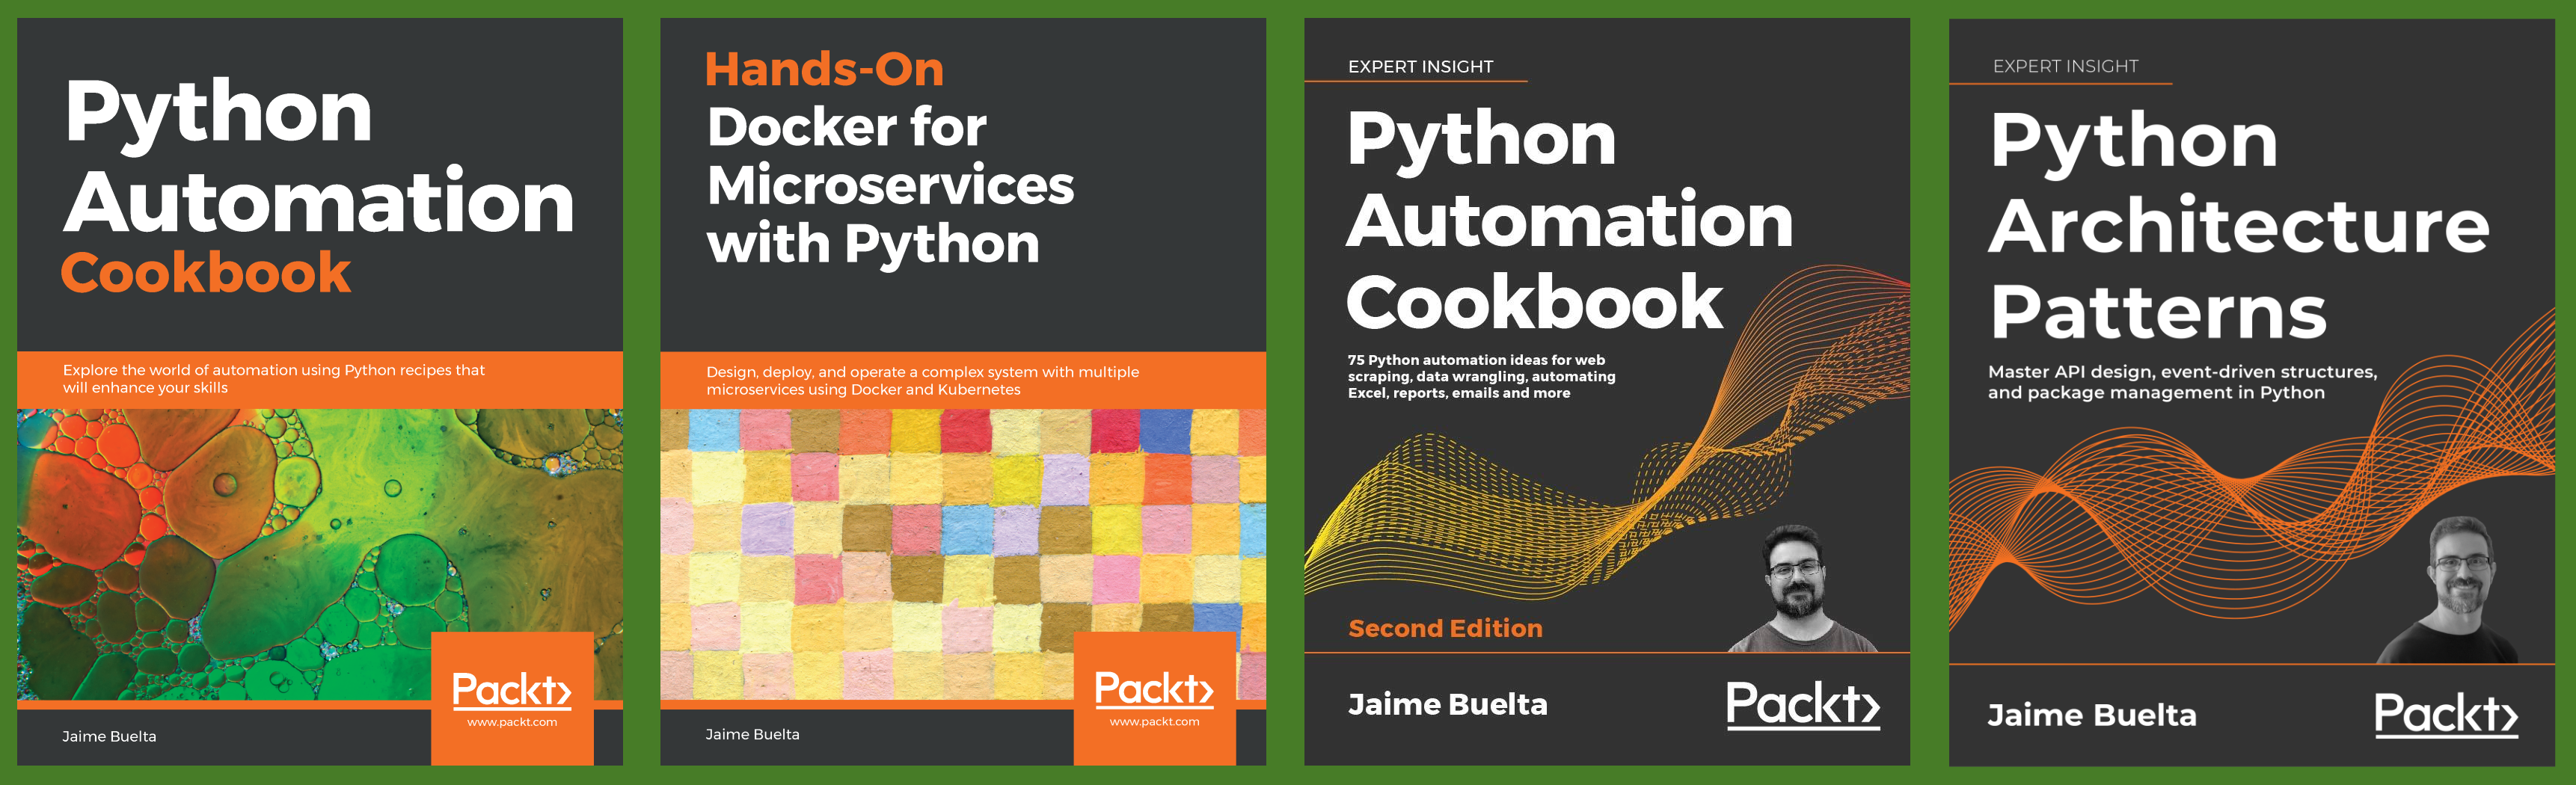 Jaime Buelta: “Python Architecture Patterns” now available!